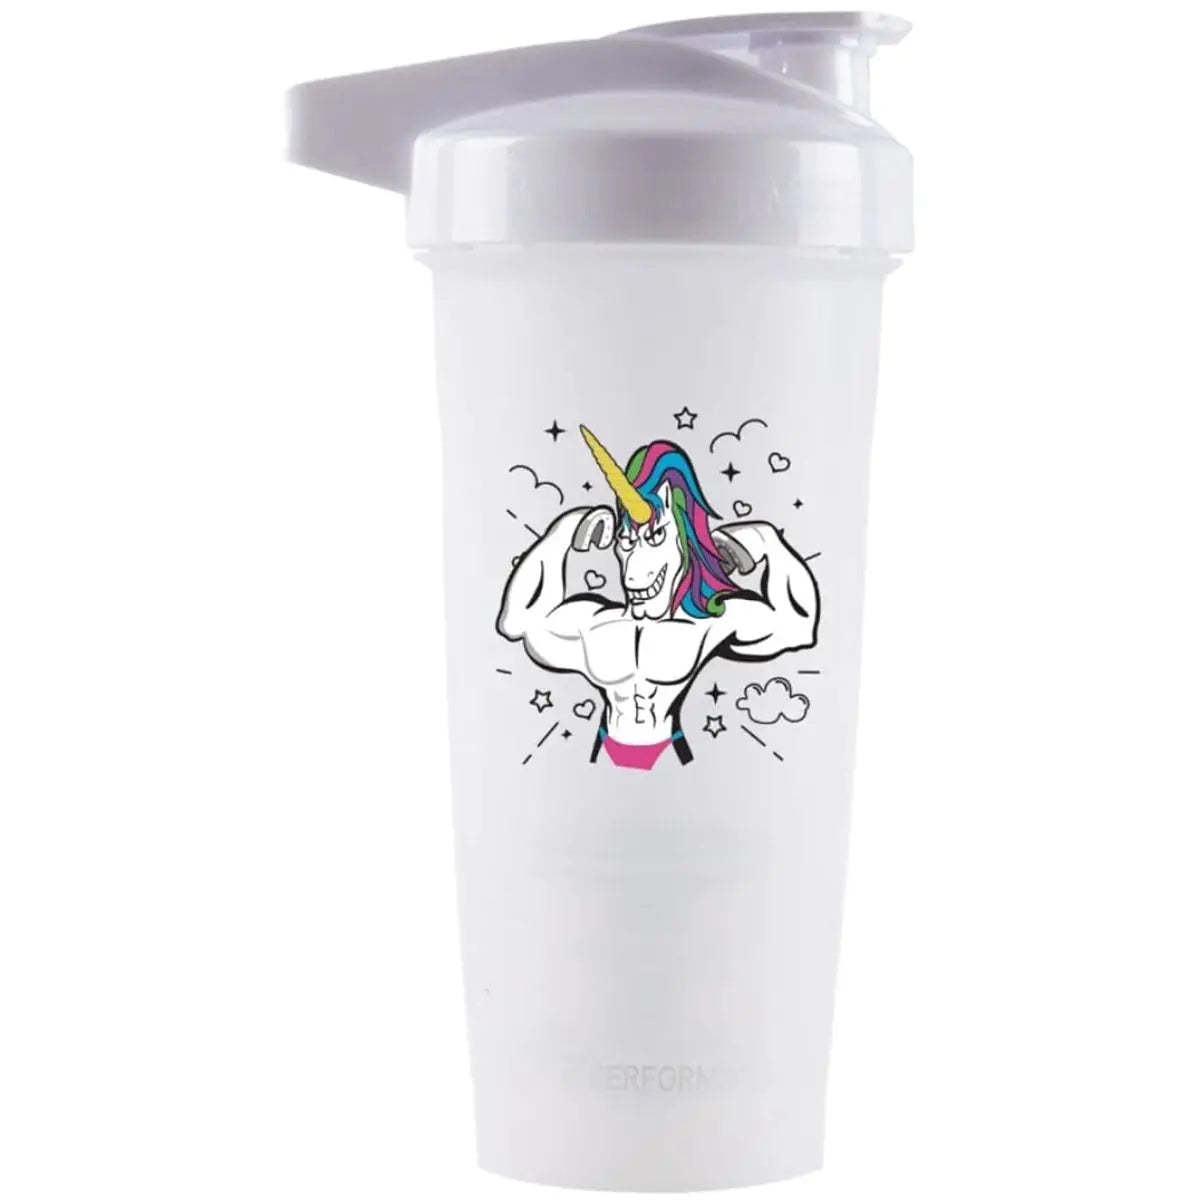 Performa Activ 28 oz. Leak-Free Shaker Cup - Unicorn Physique Performa